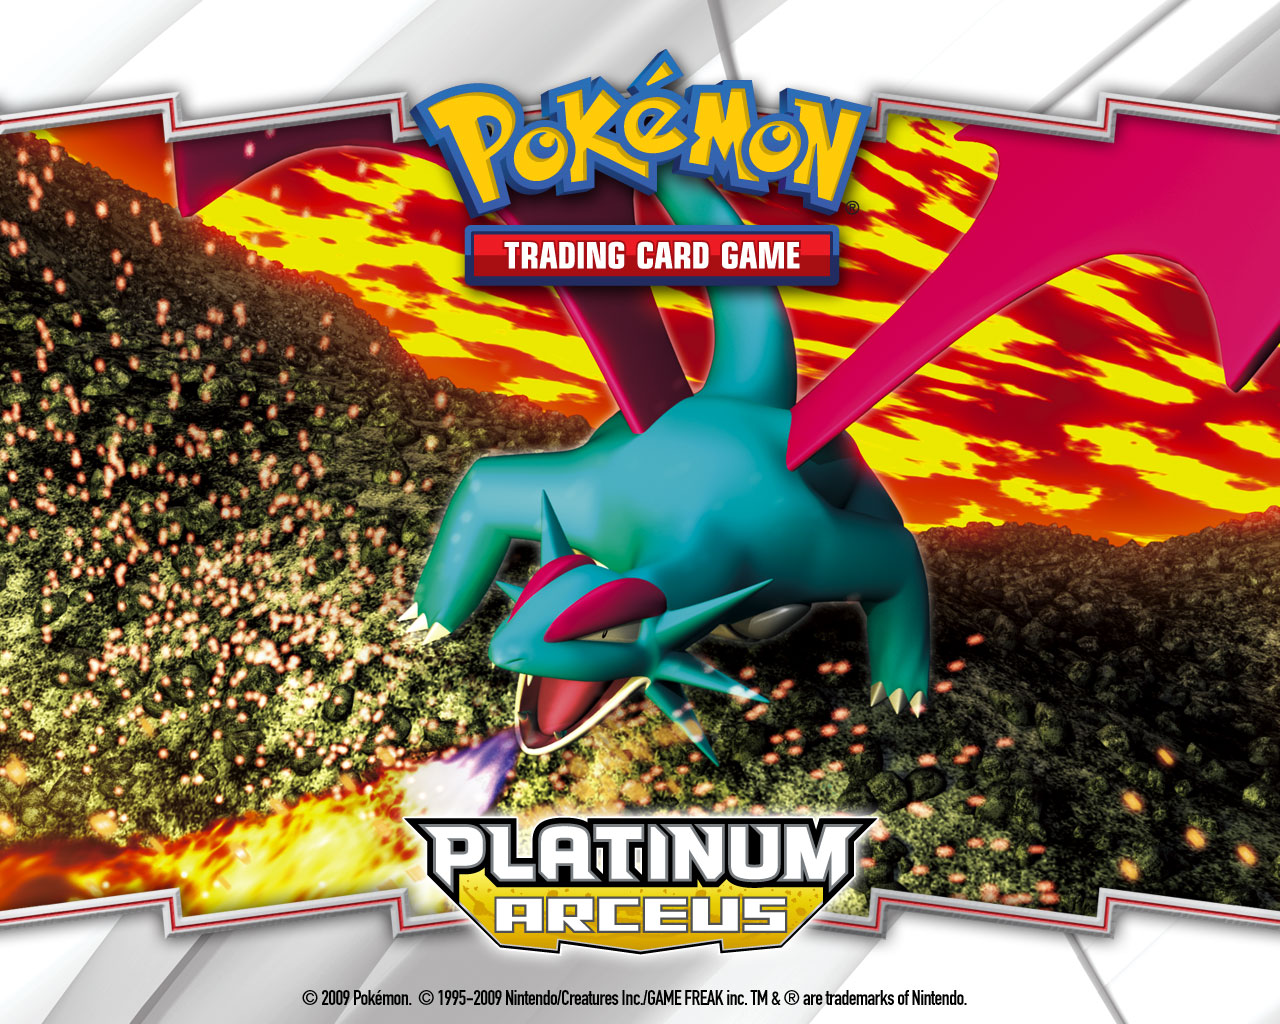 Sunain On 11/04/09 - Pokemon Trading Card Game 2009 , HD Wallpaper & Backgrounds